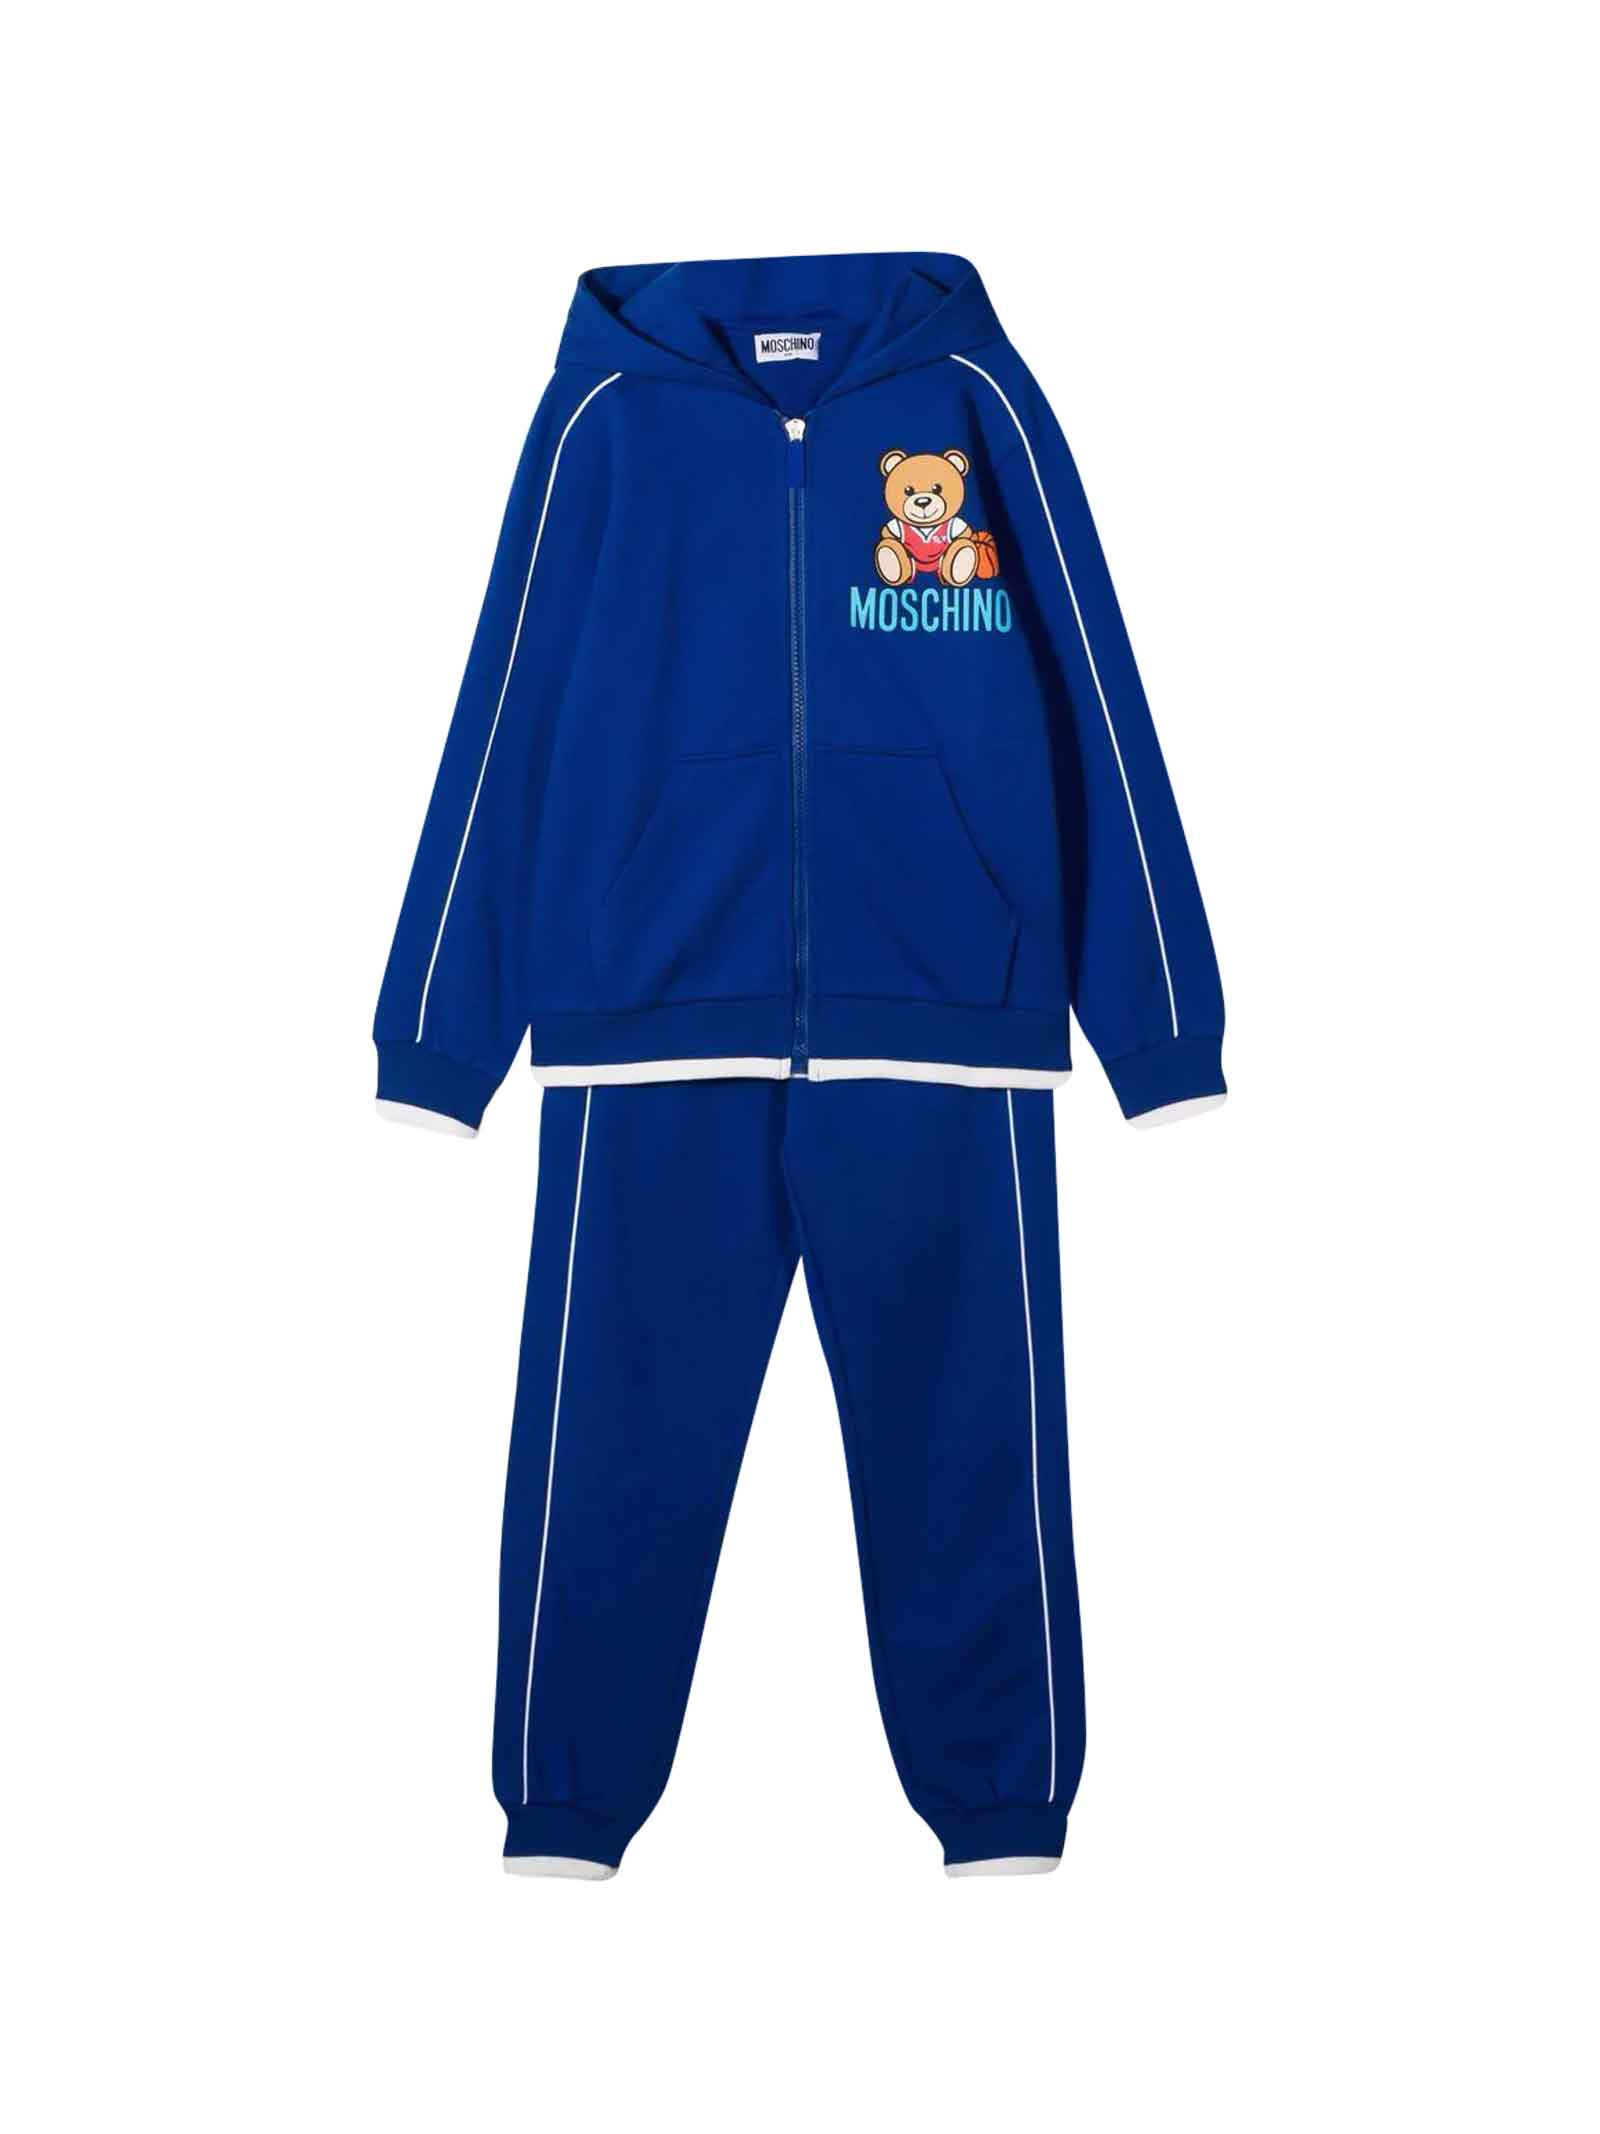 Moschino Blue Unisex Sport Suit